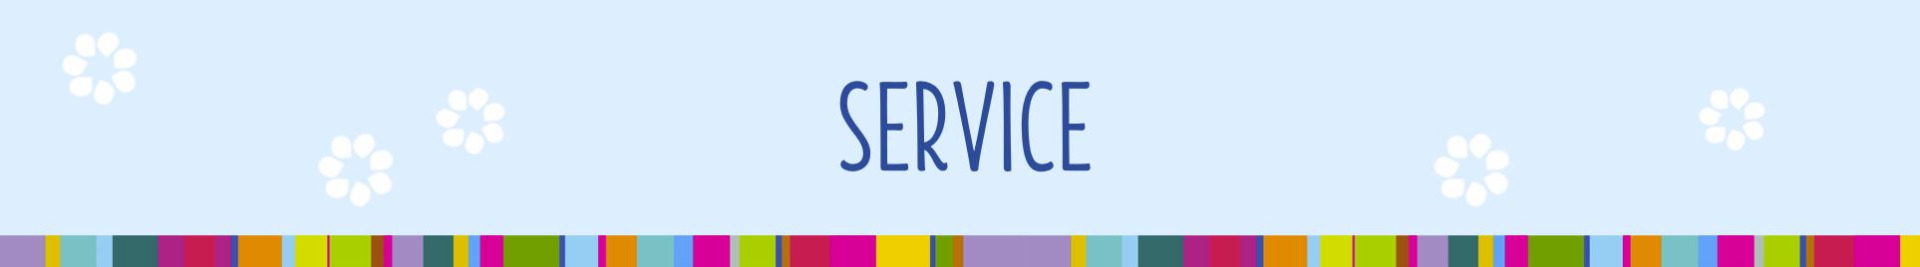 Service_1